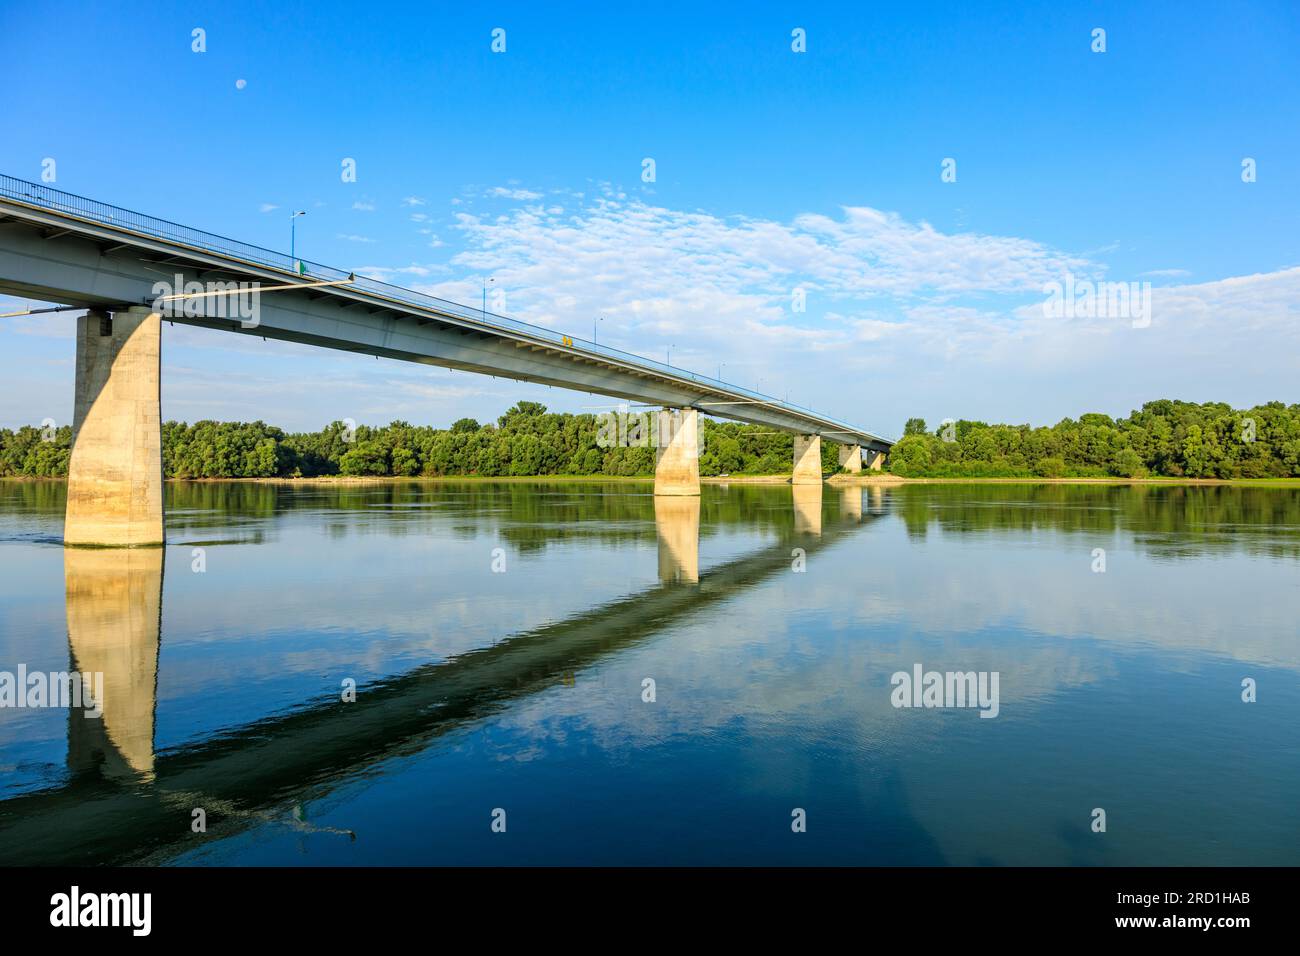 Szent-Laszlo bridge, danube bridge in southern hungary, Szekszárd, early in the morning, blue sky, trees, Szent-Laszlo-Brücke, water, river cruise, Stock Photo